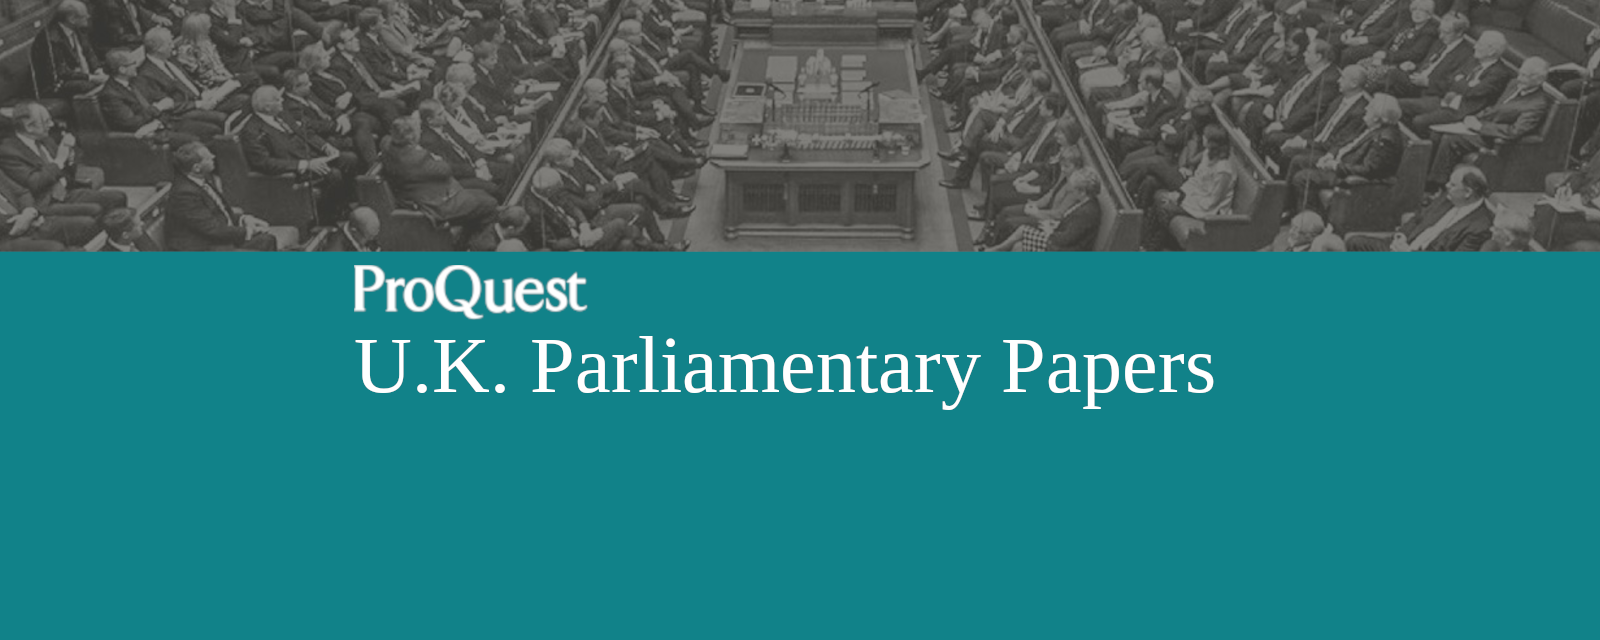 U.K. Parliamentary Papers